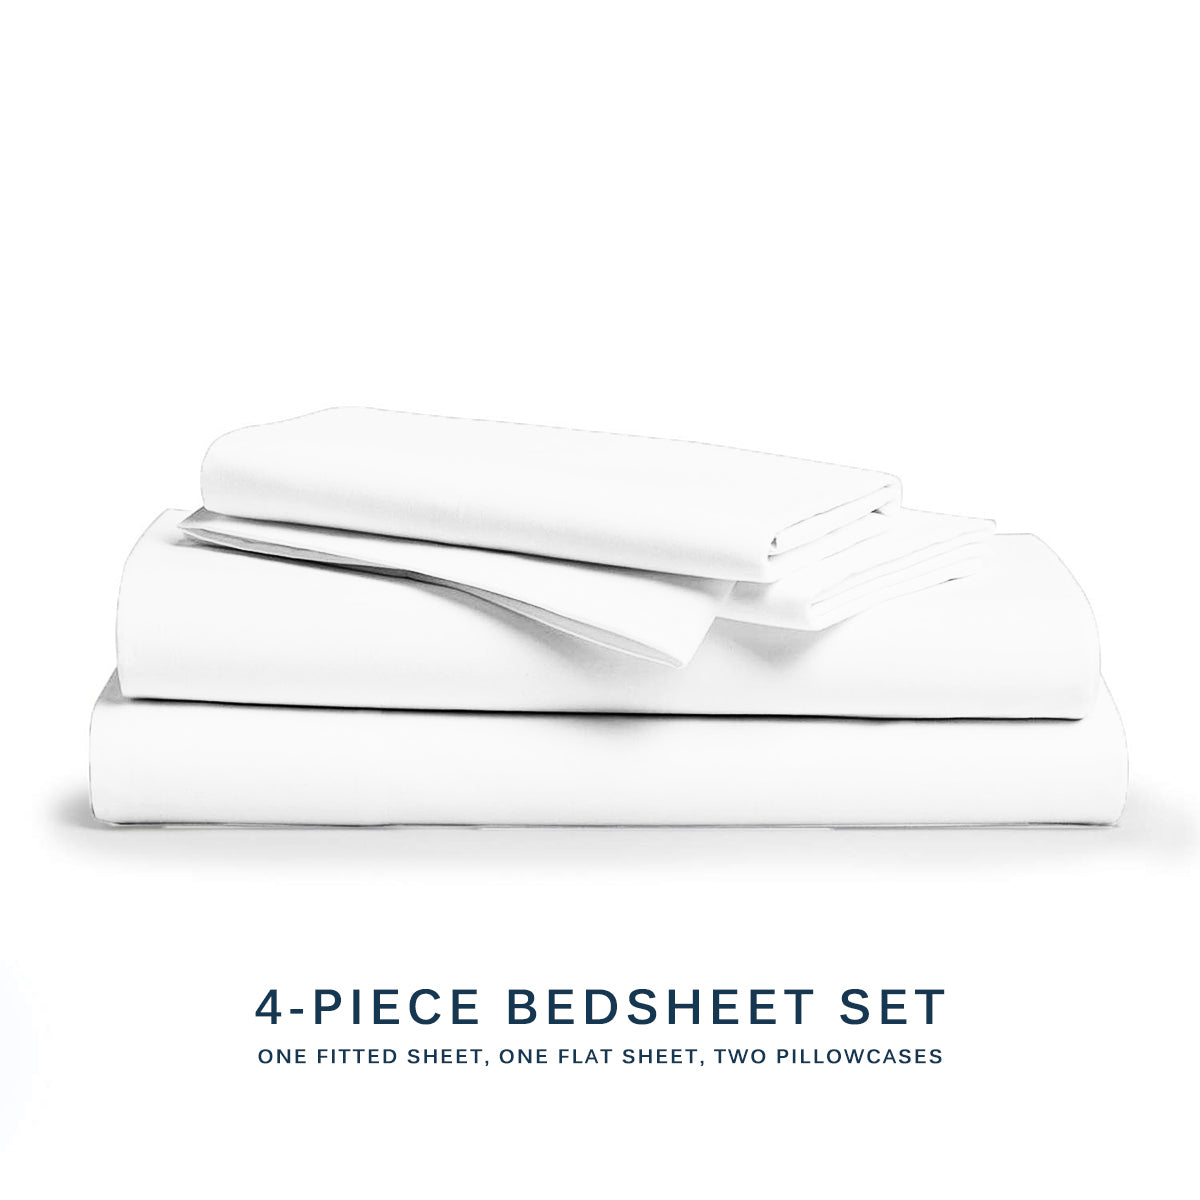 Mali Dreaming Casa Microfiber Bed Sheet 4-PC Size Bedding Set (Light Gray/White)